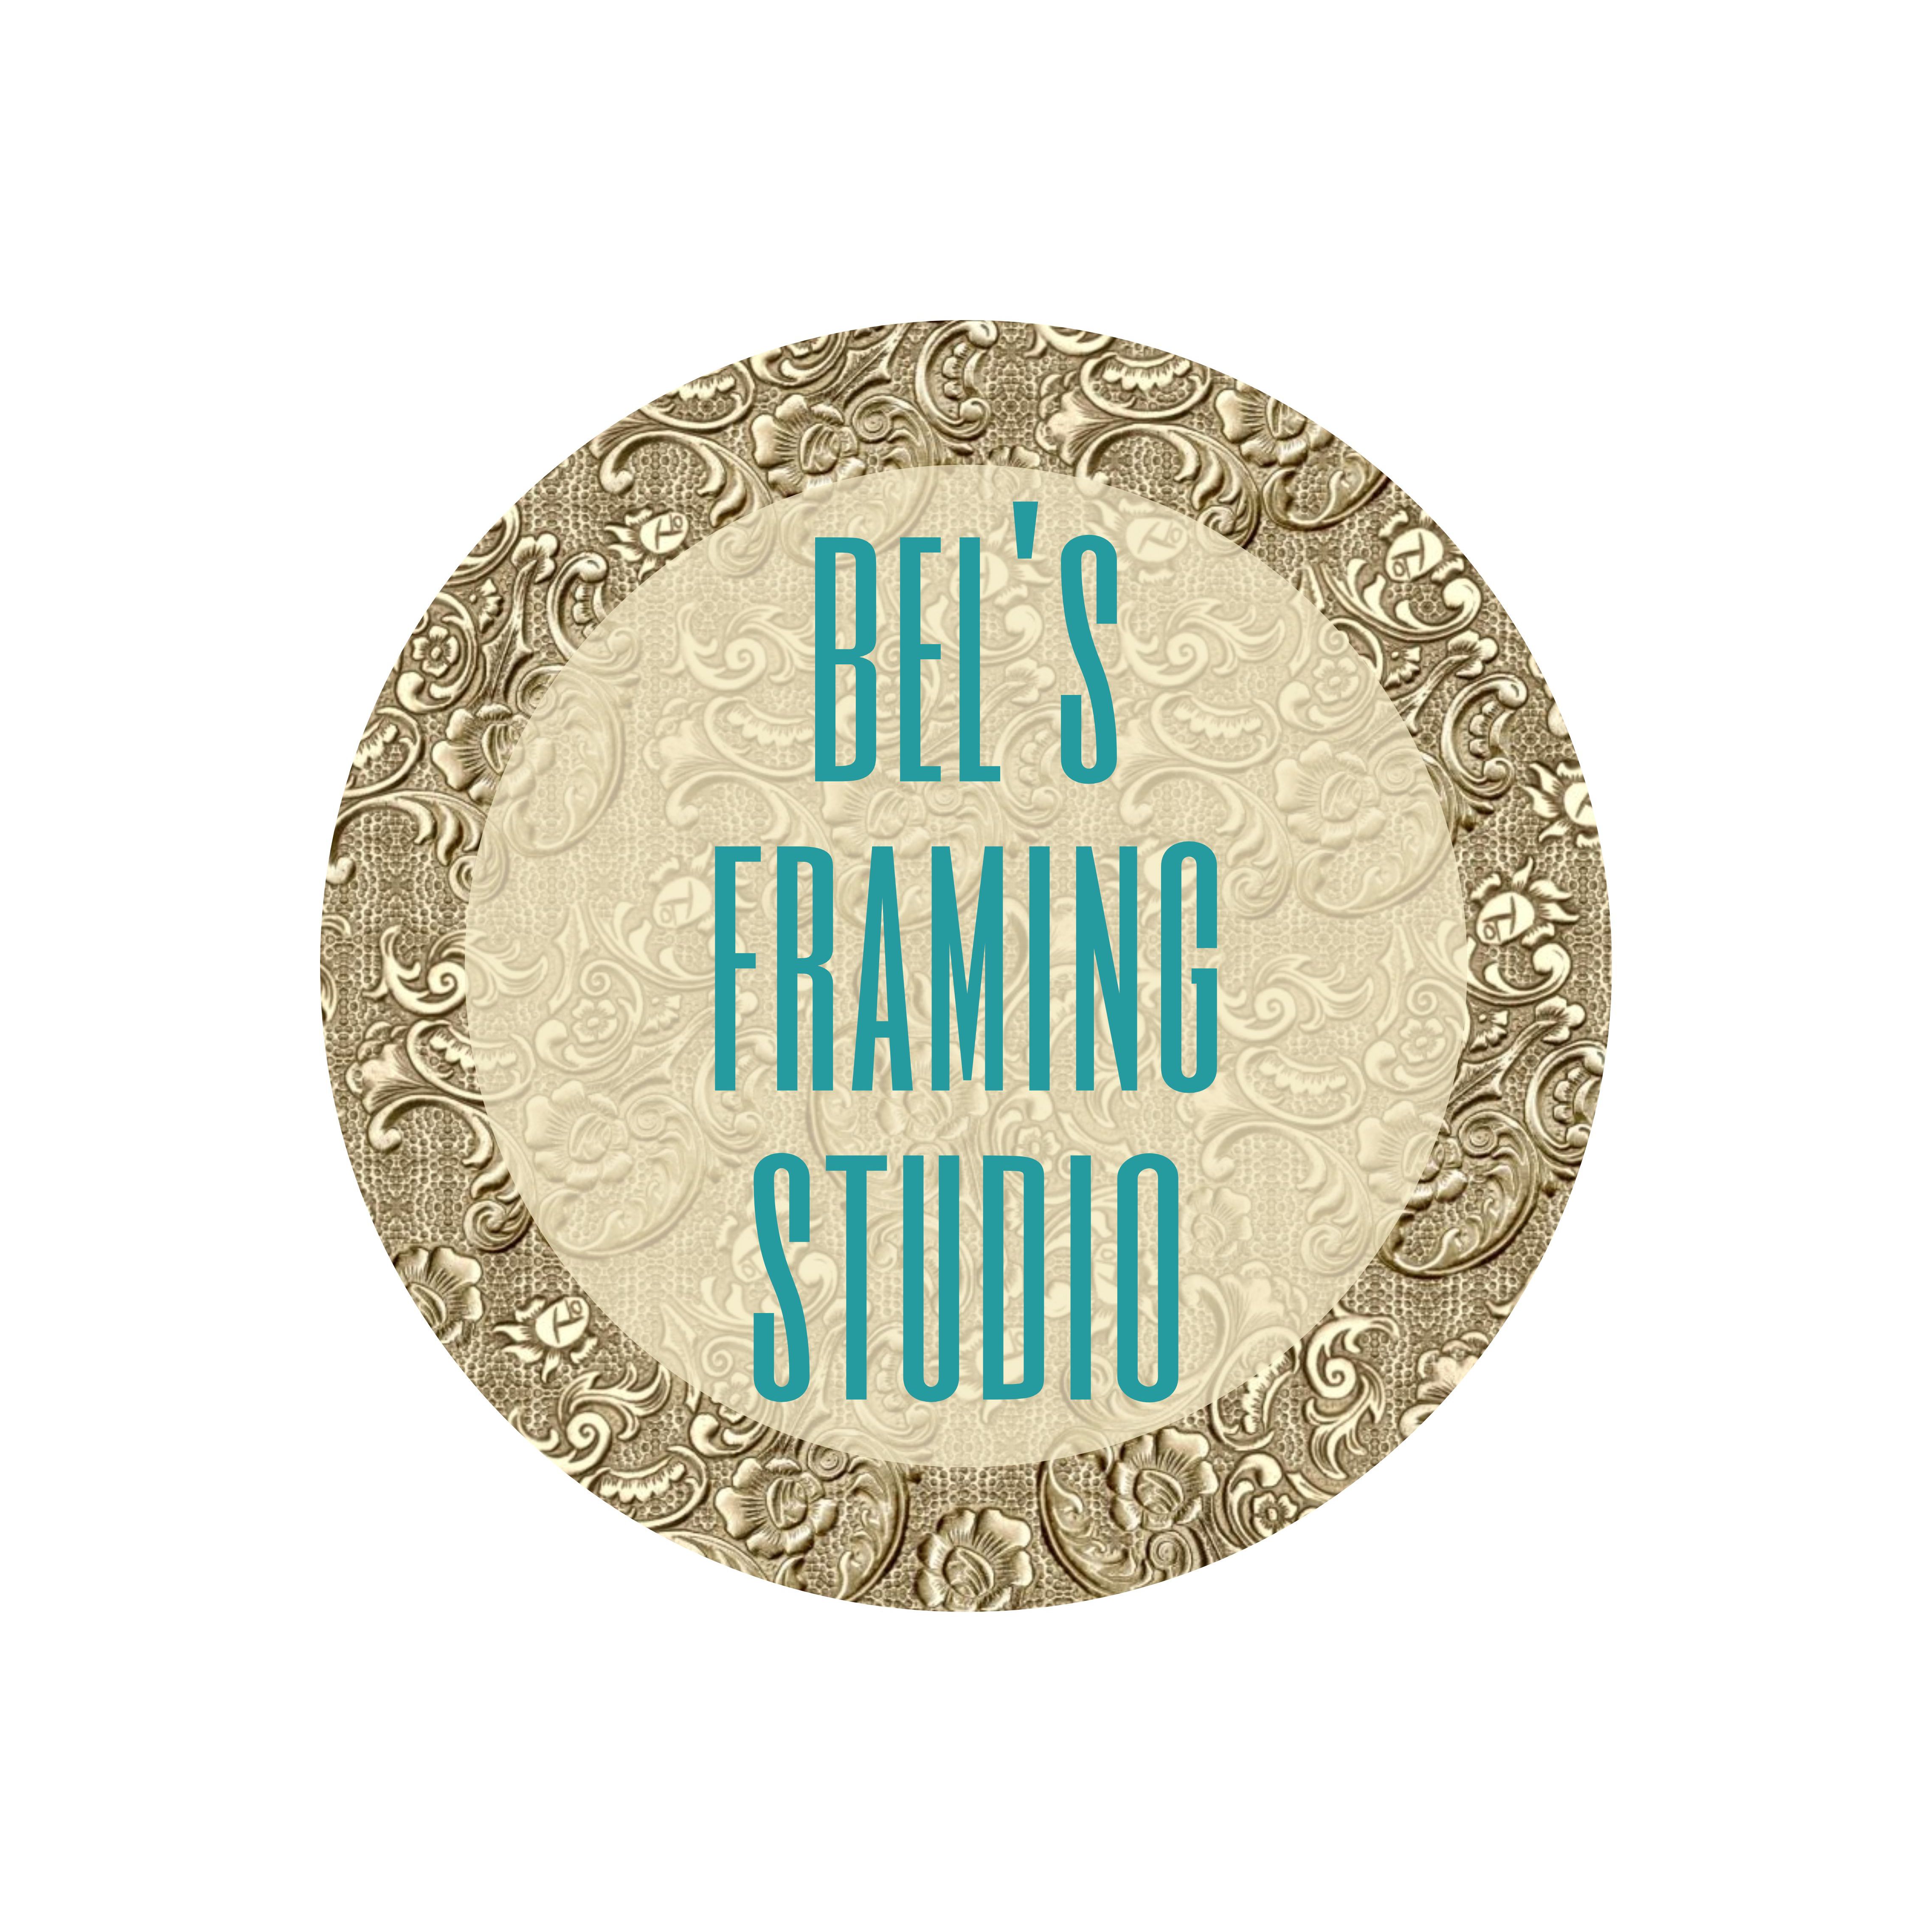 Bel's Framing Studio Logo